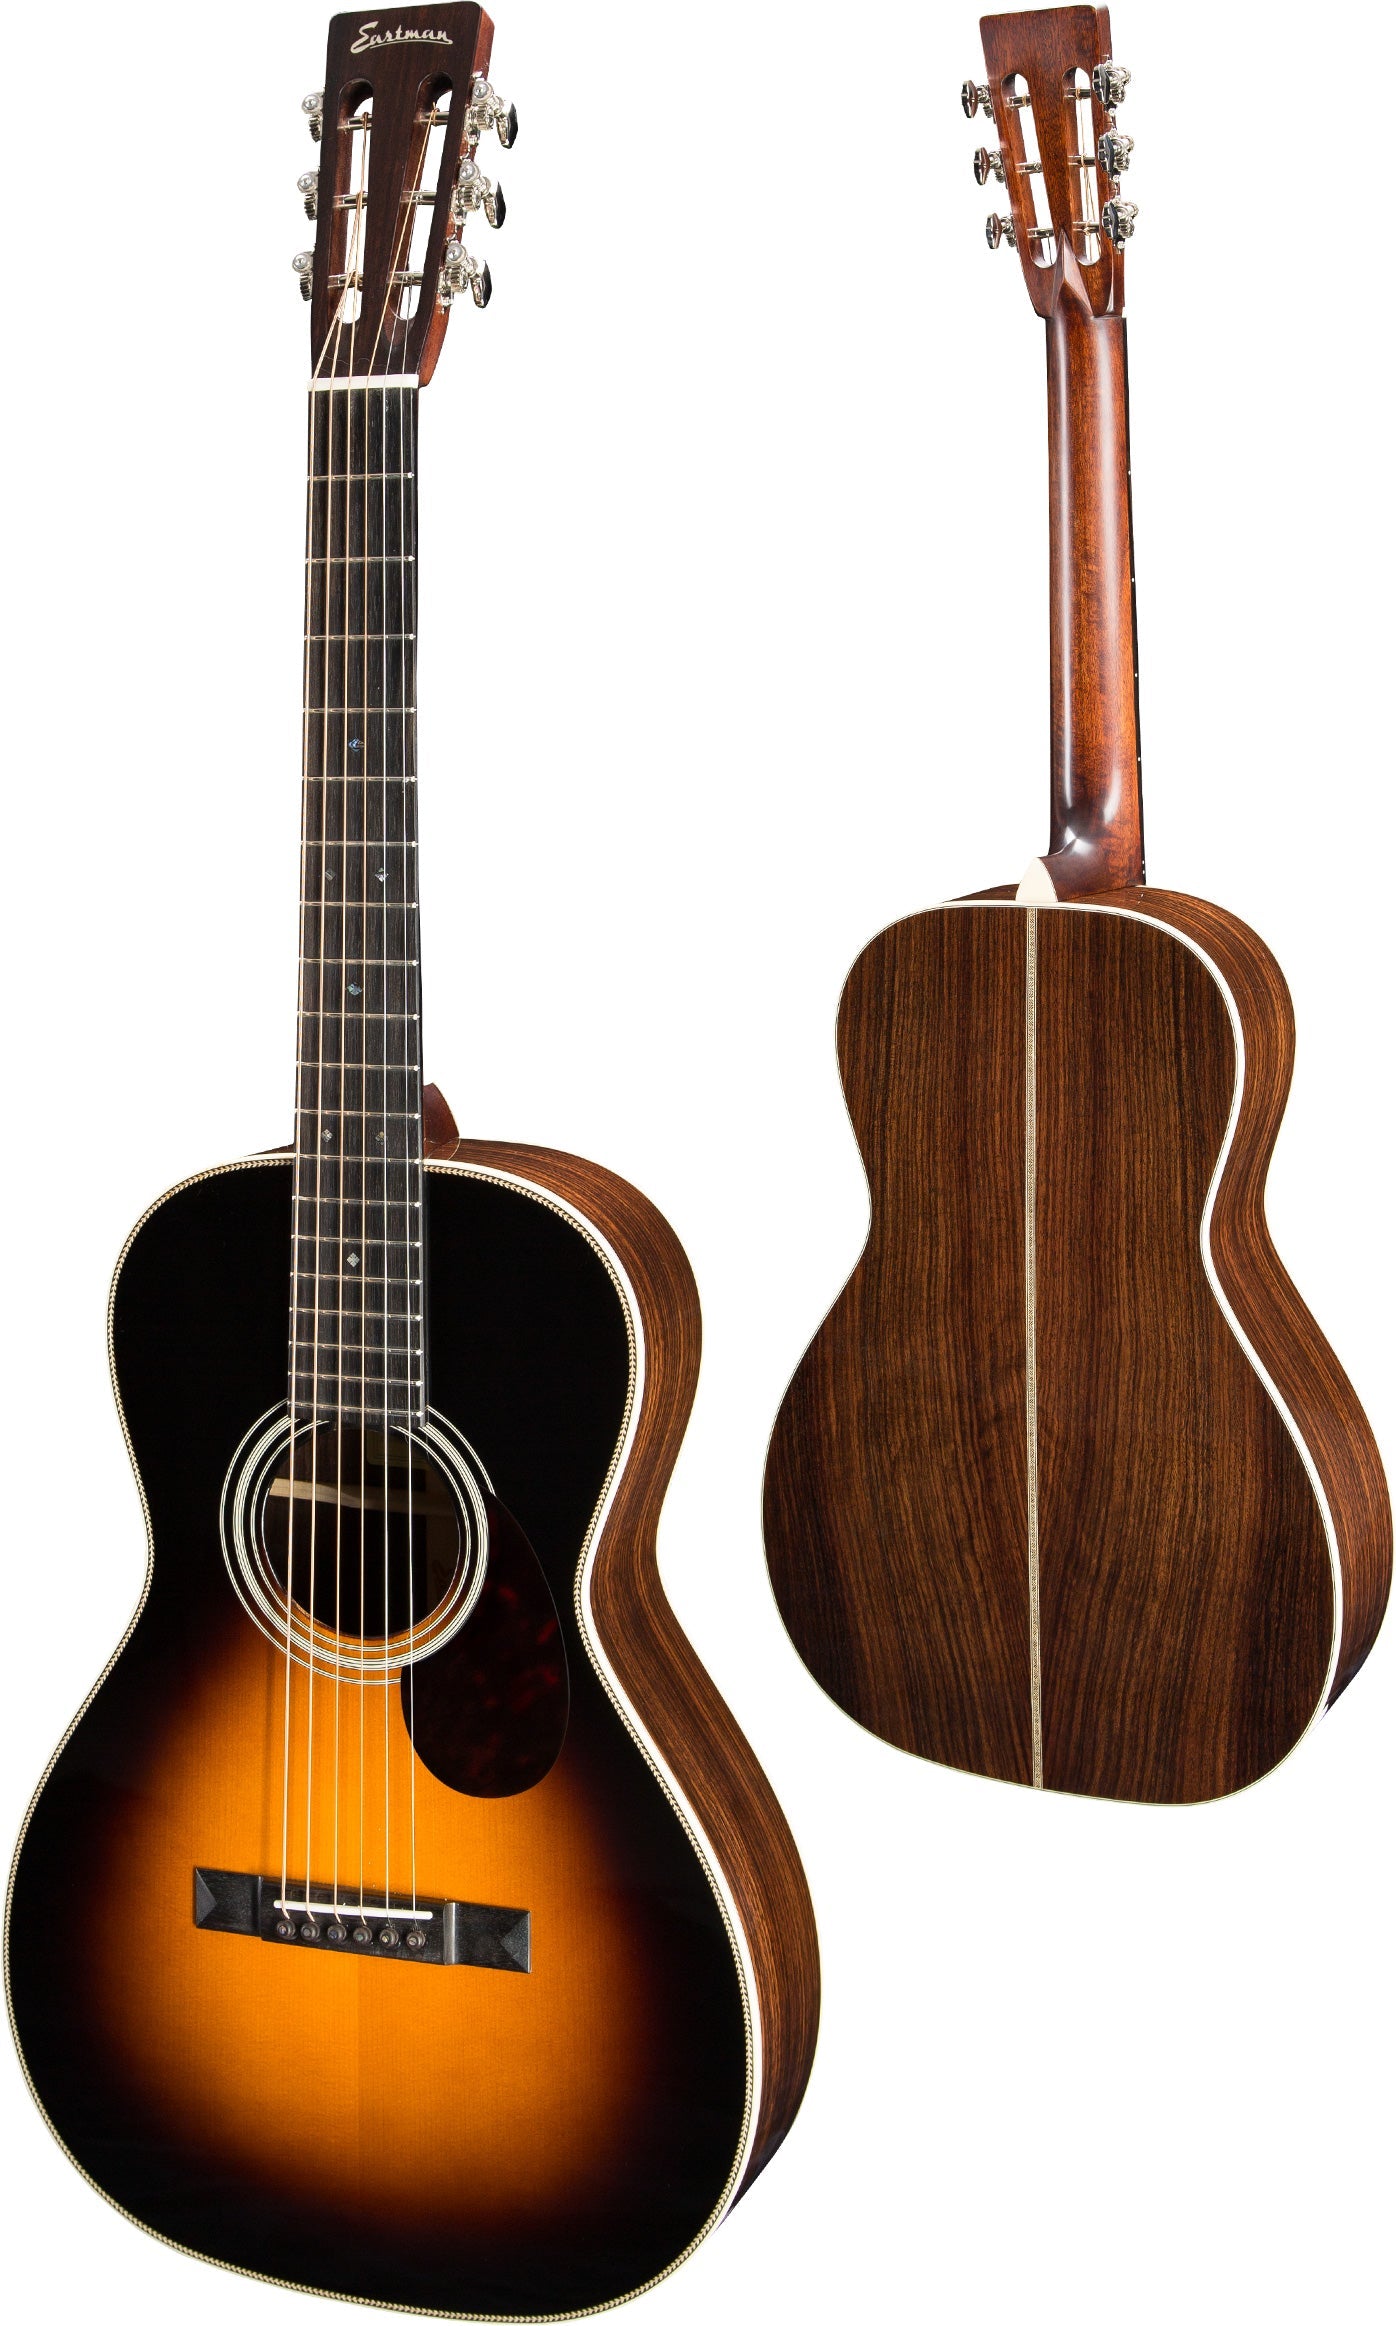 Eastman E20P-TC-SB, Acoustic Guitar for sale at Richards Guitars.